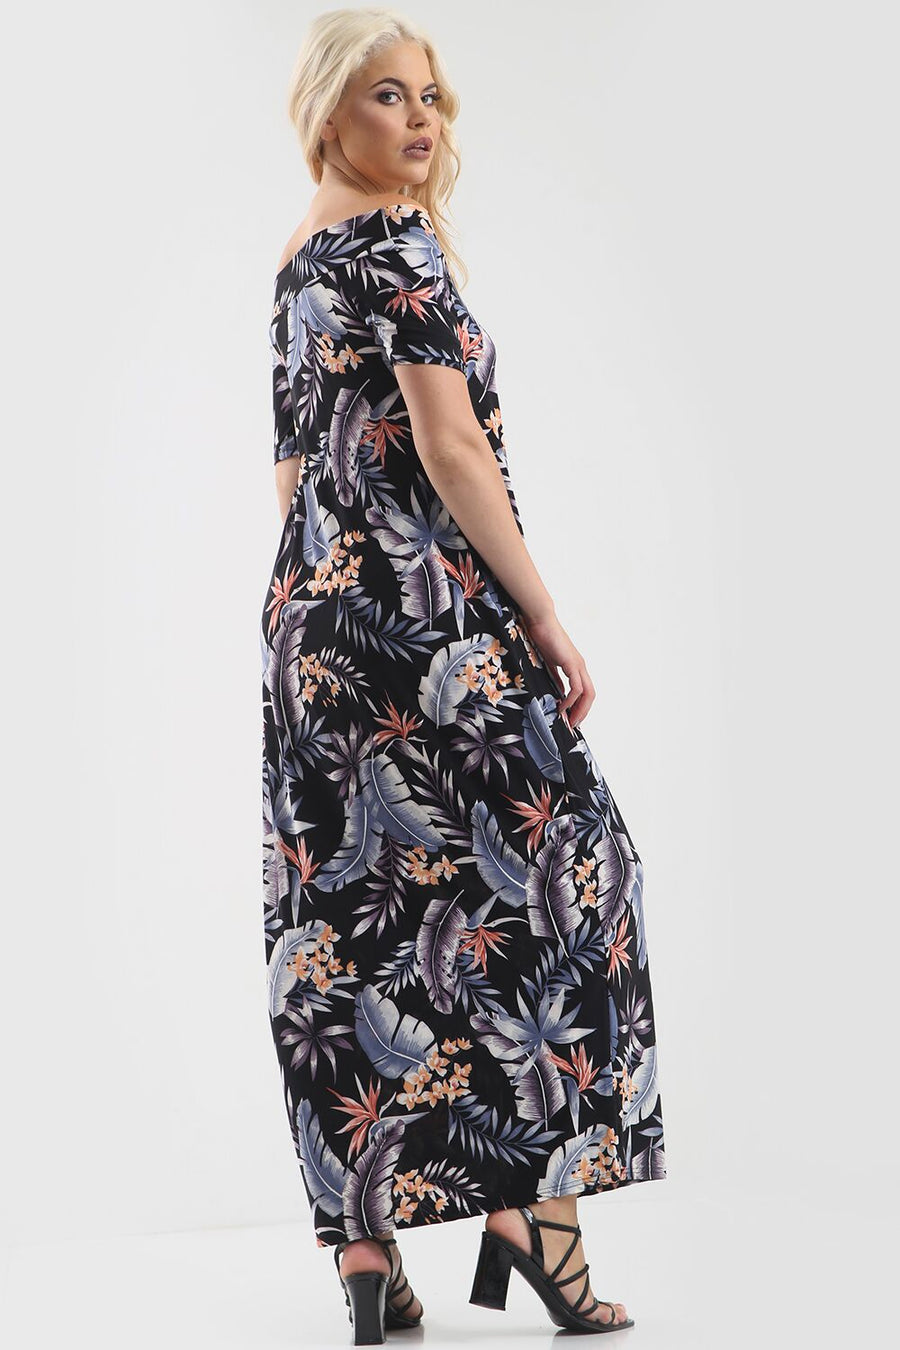 Off Shoulder Blue Floral Print Maxi Dress - bejealous-com